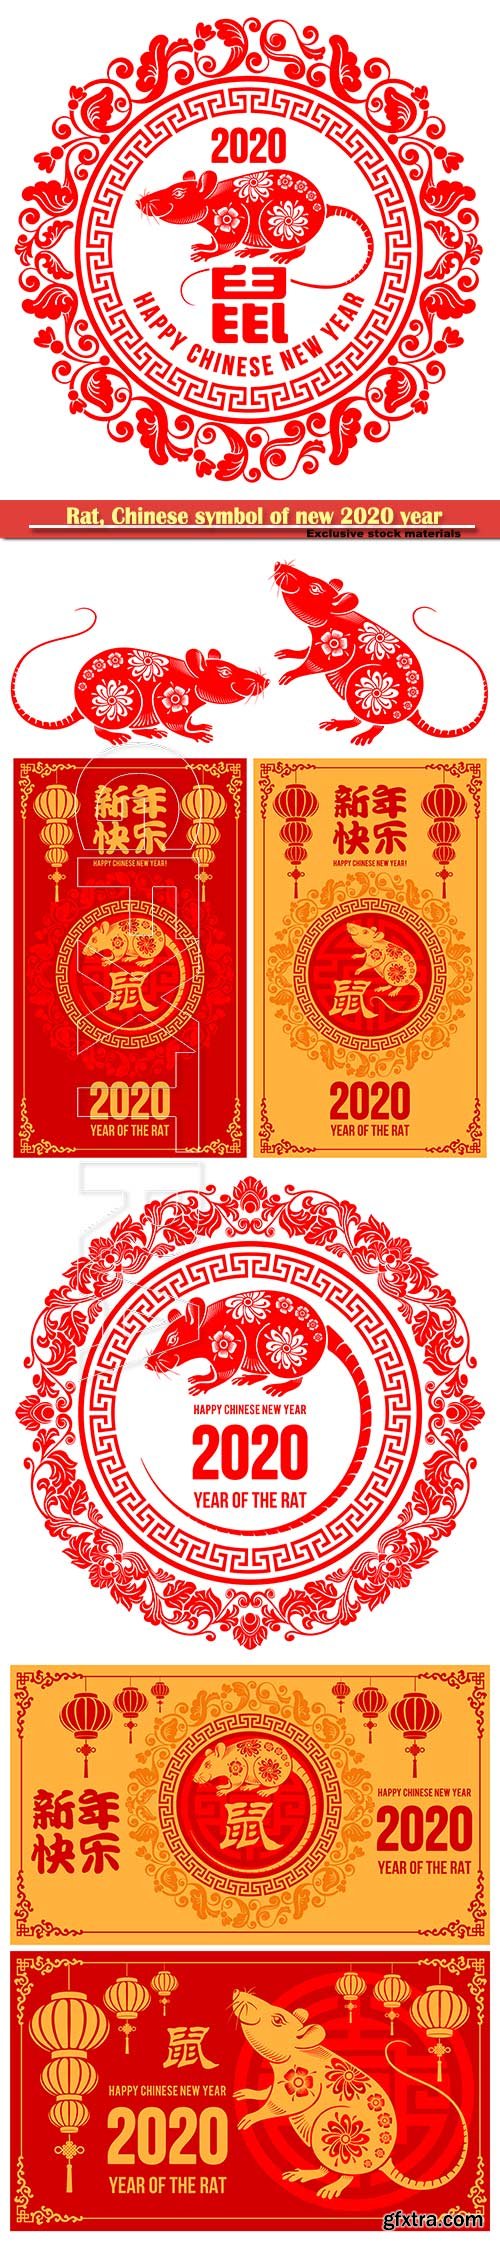 Rat, Chinese symbol of new 2020 year